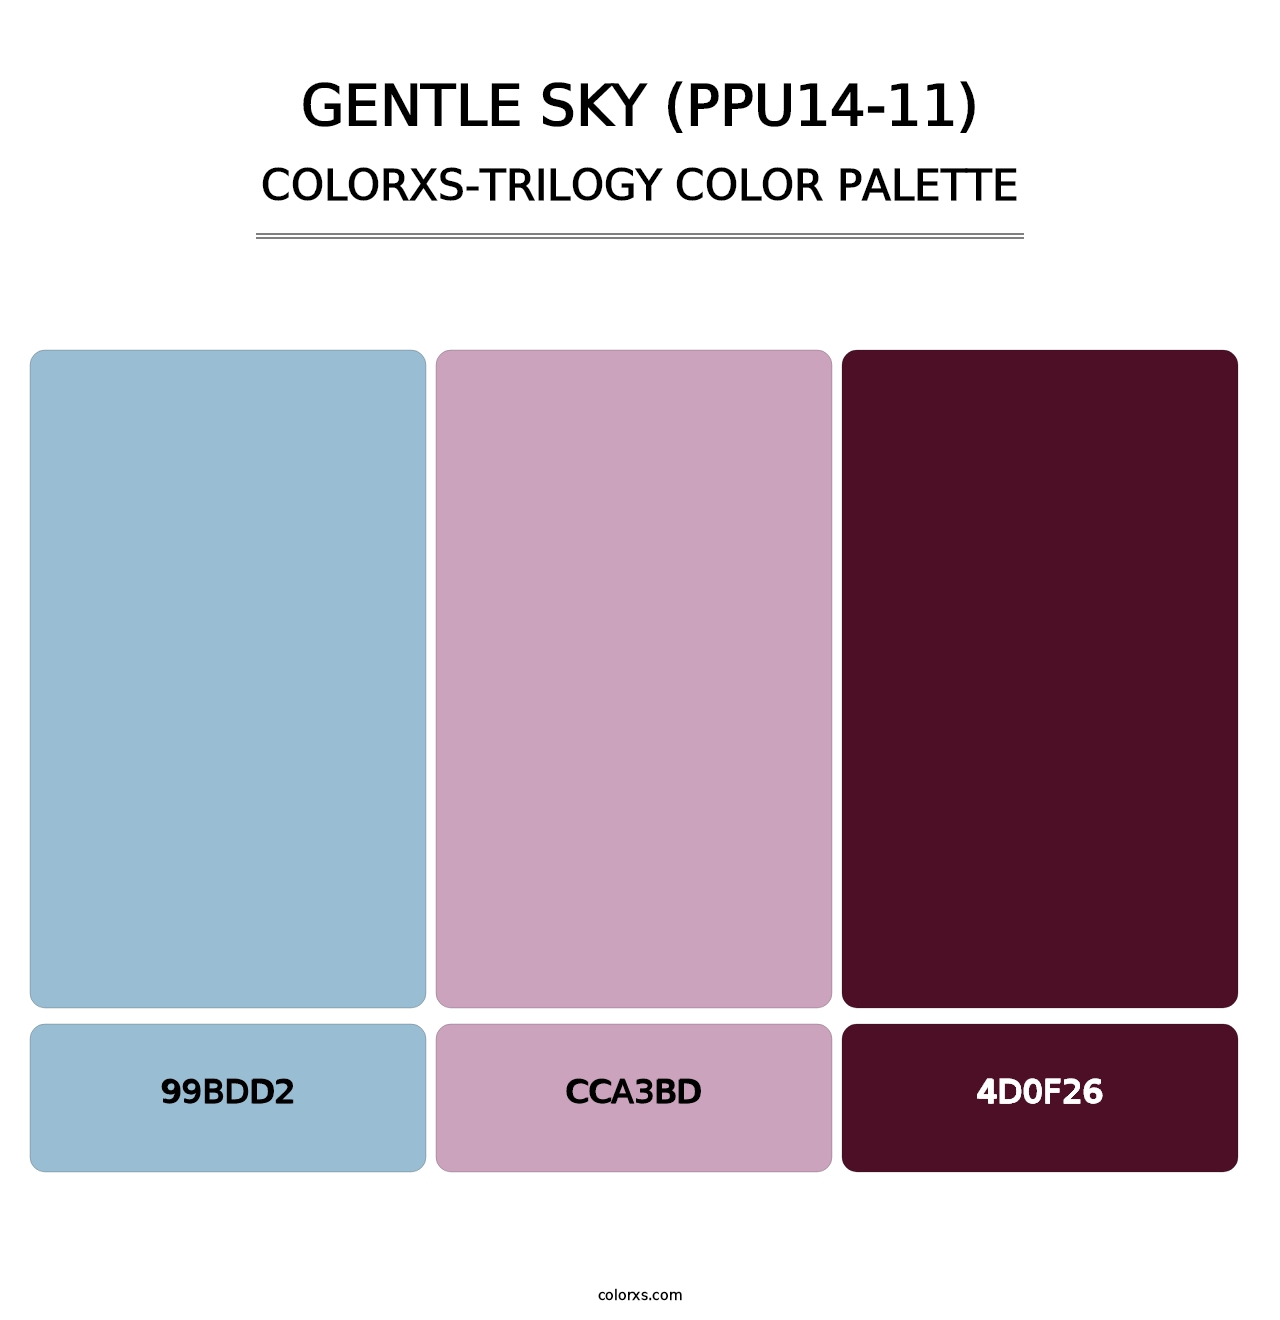 Gentle Sky (PPU14-11) - Colorxs Trilogy Palette